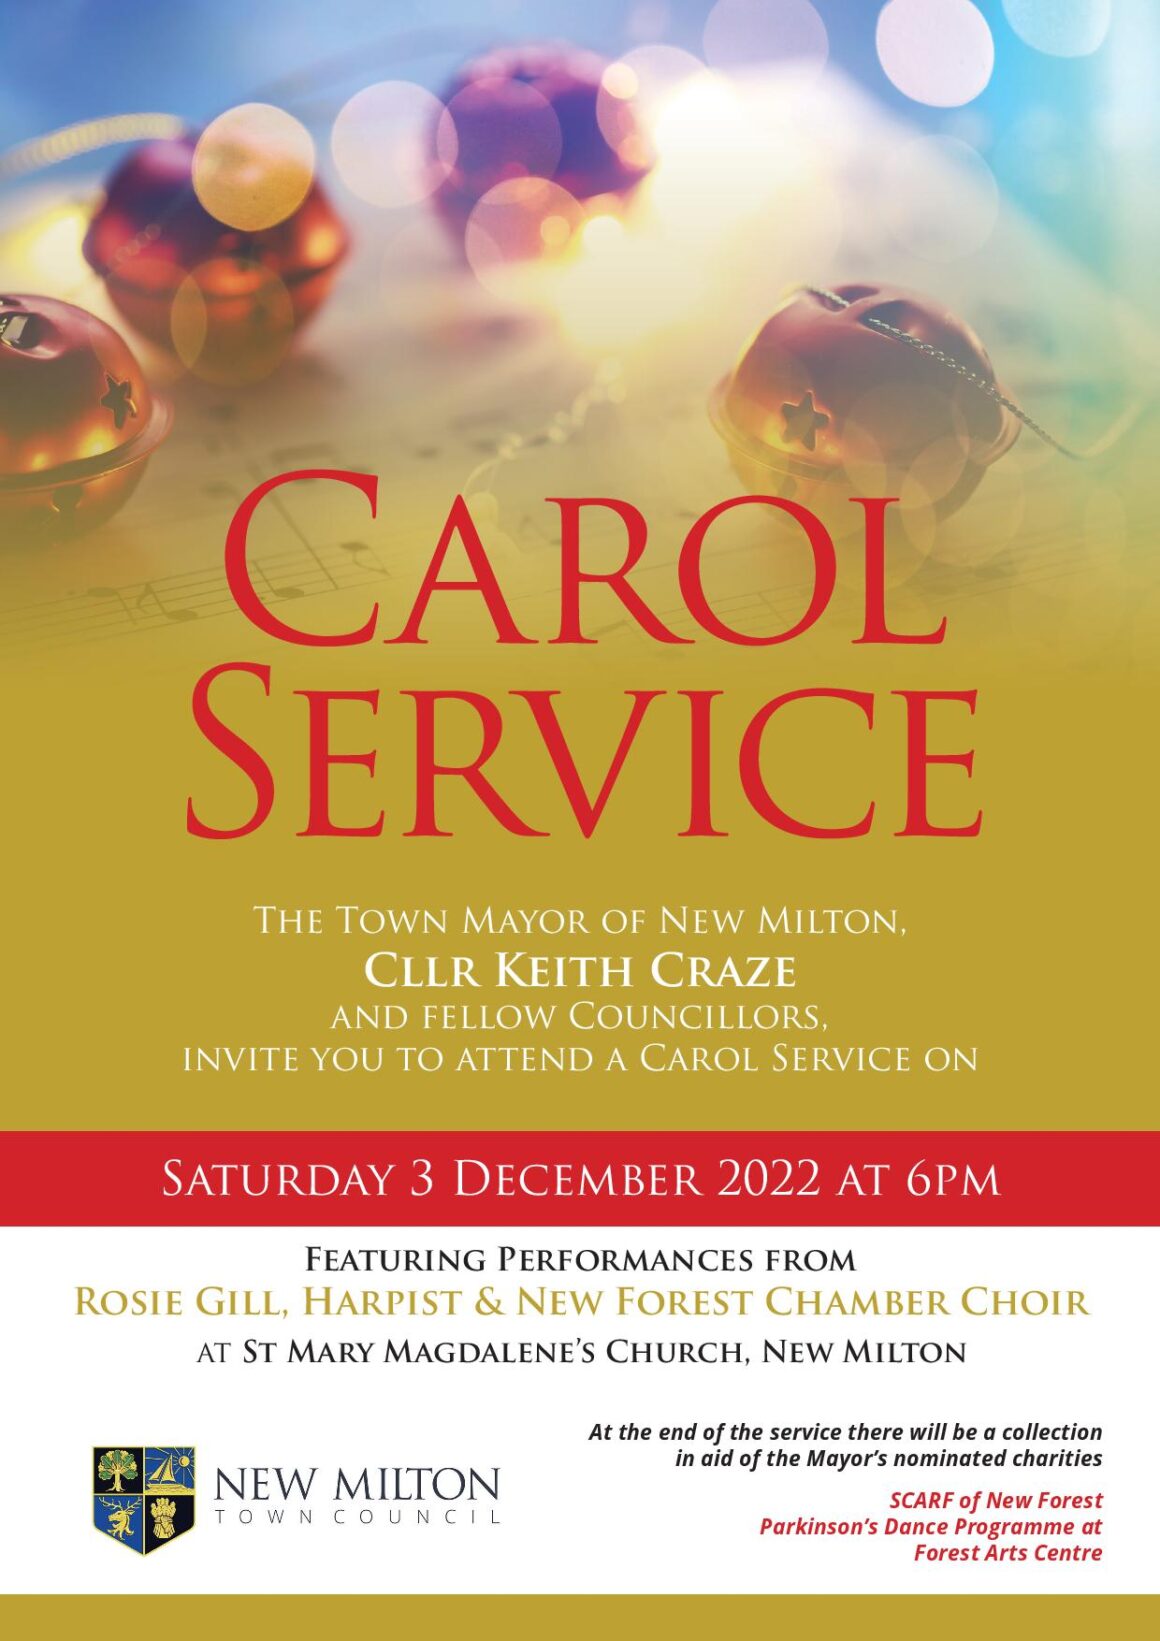 Annual Carol Service